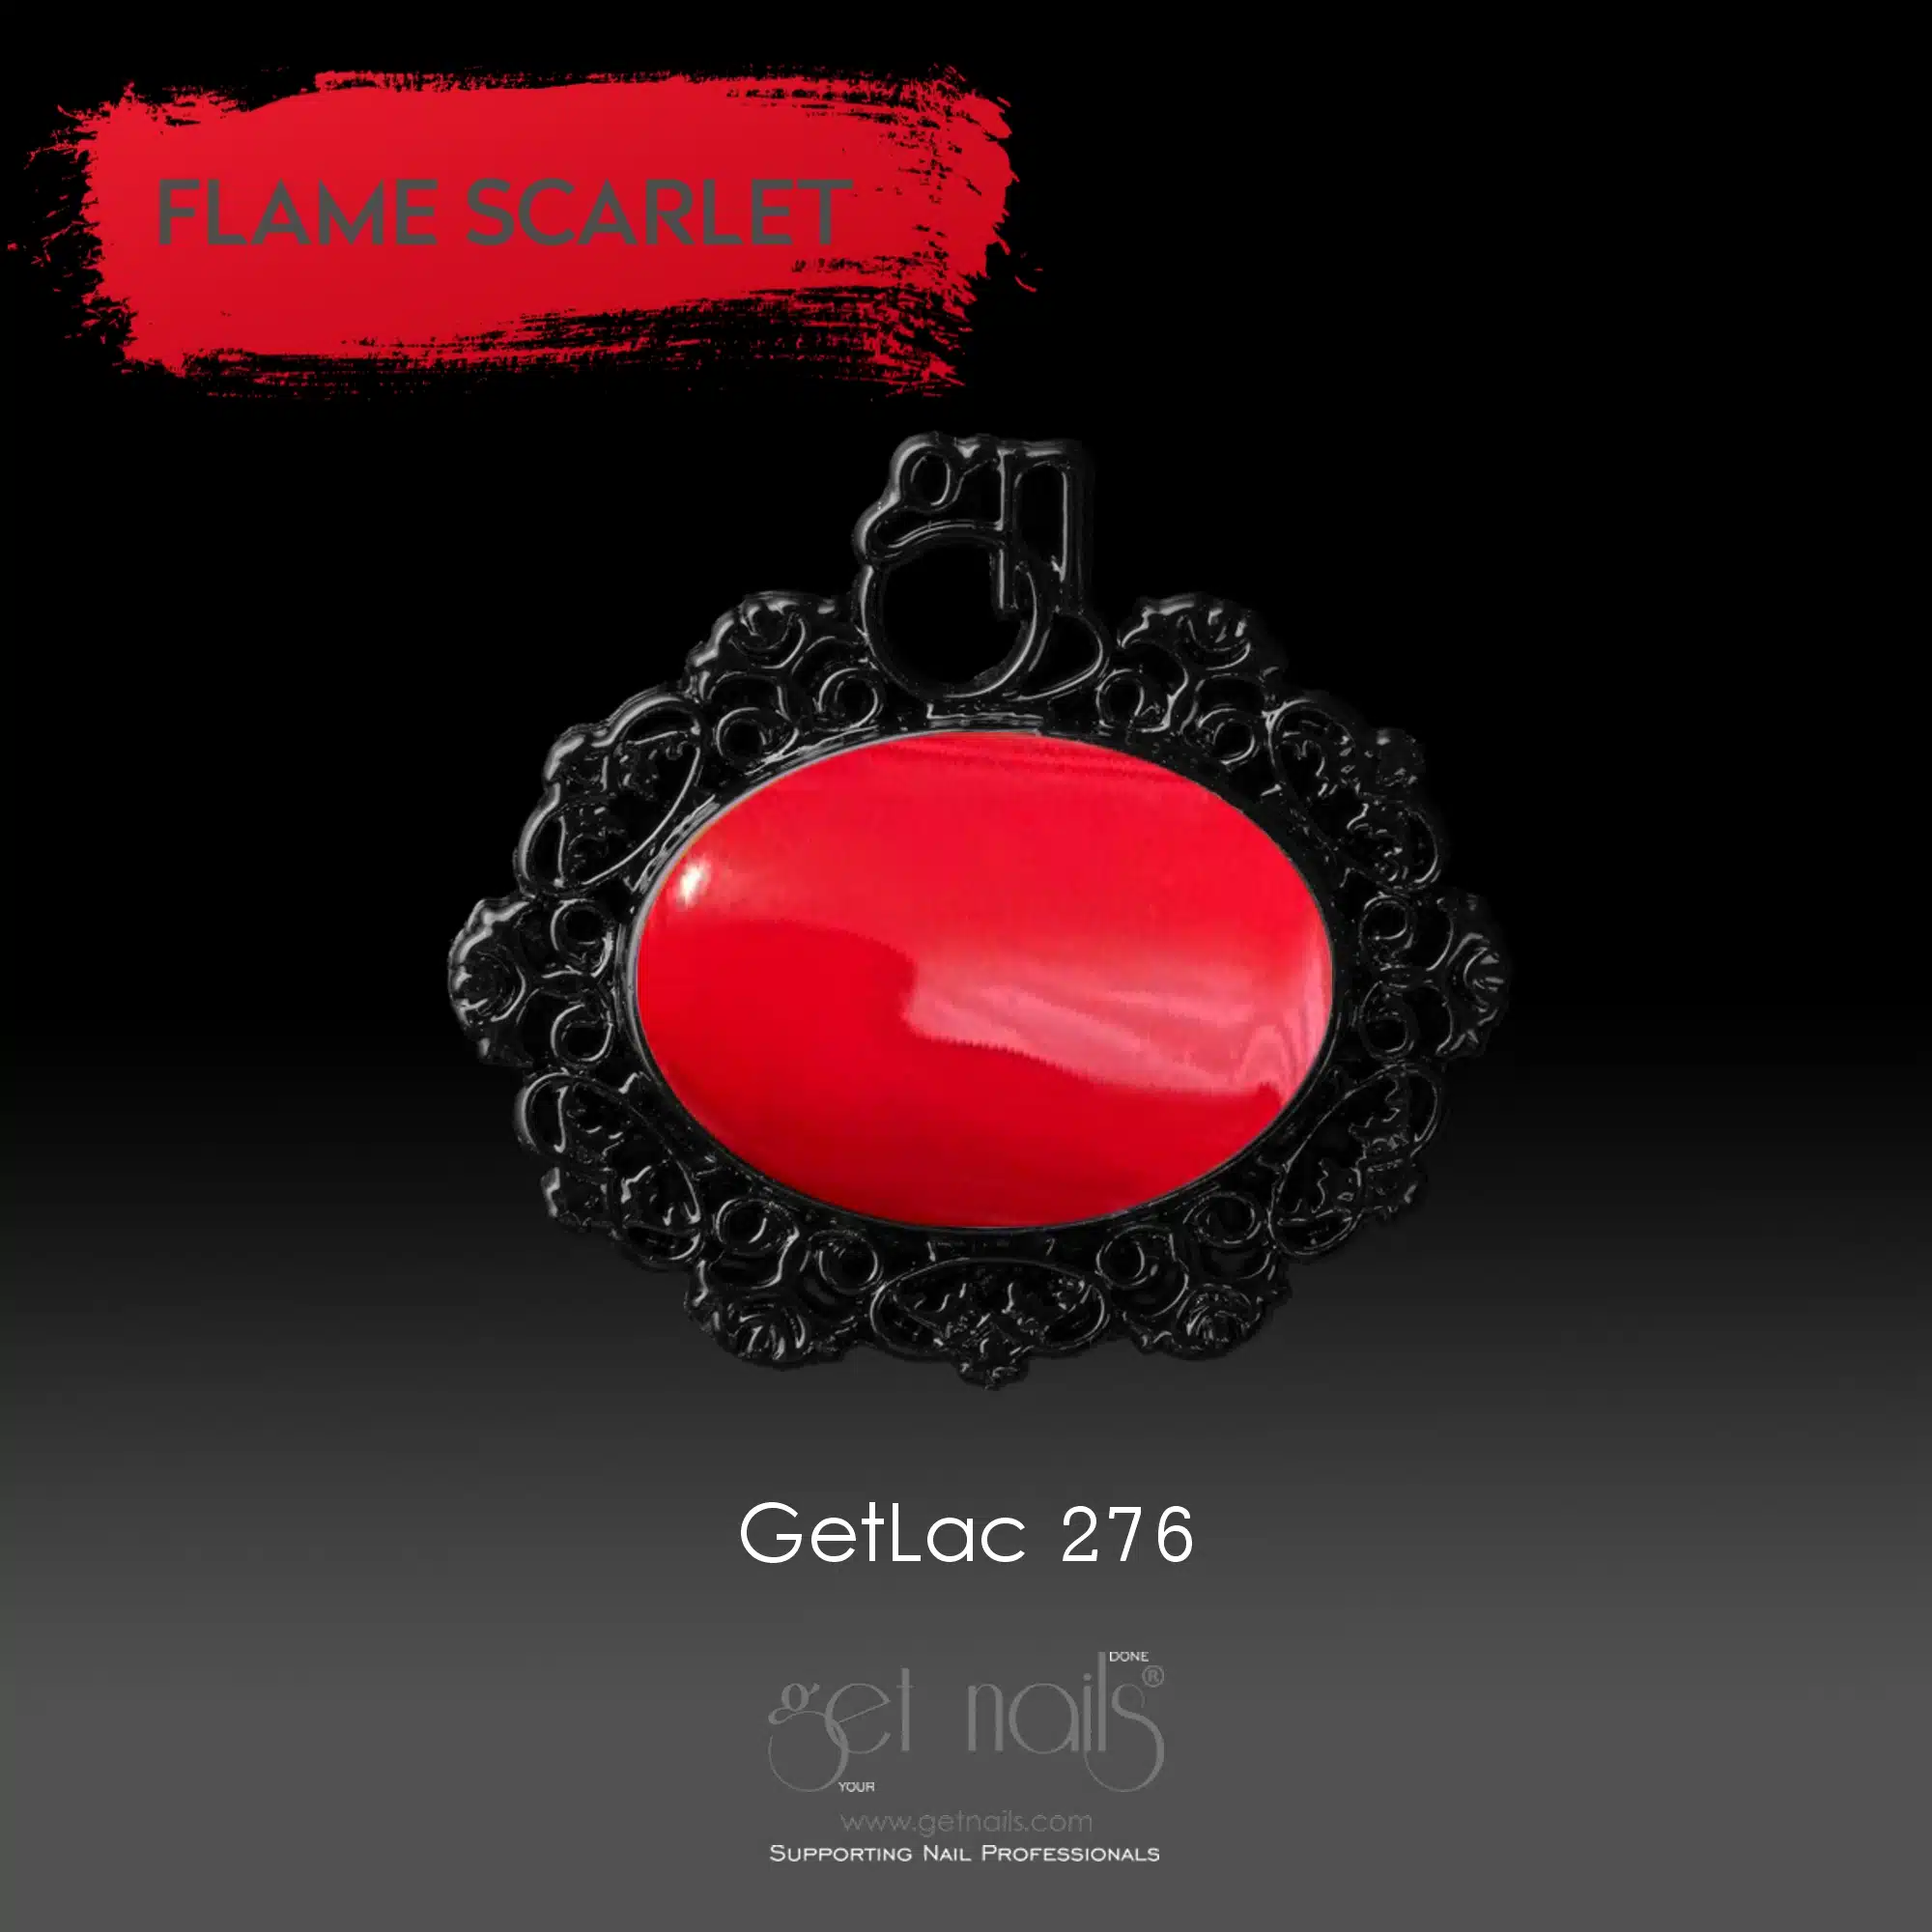 Get Nails Austria - GetLac 276 15g Flame Scarlet